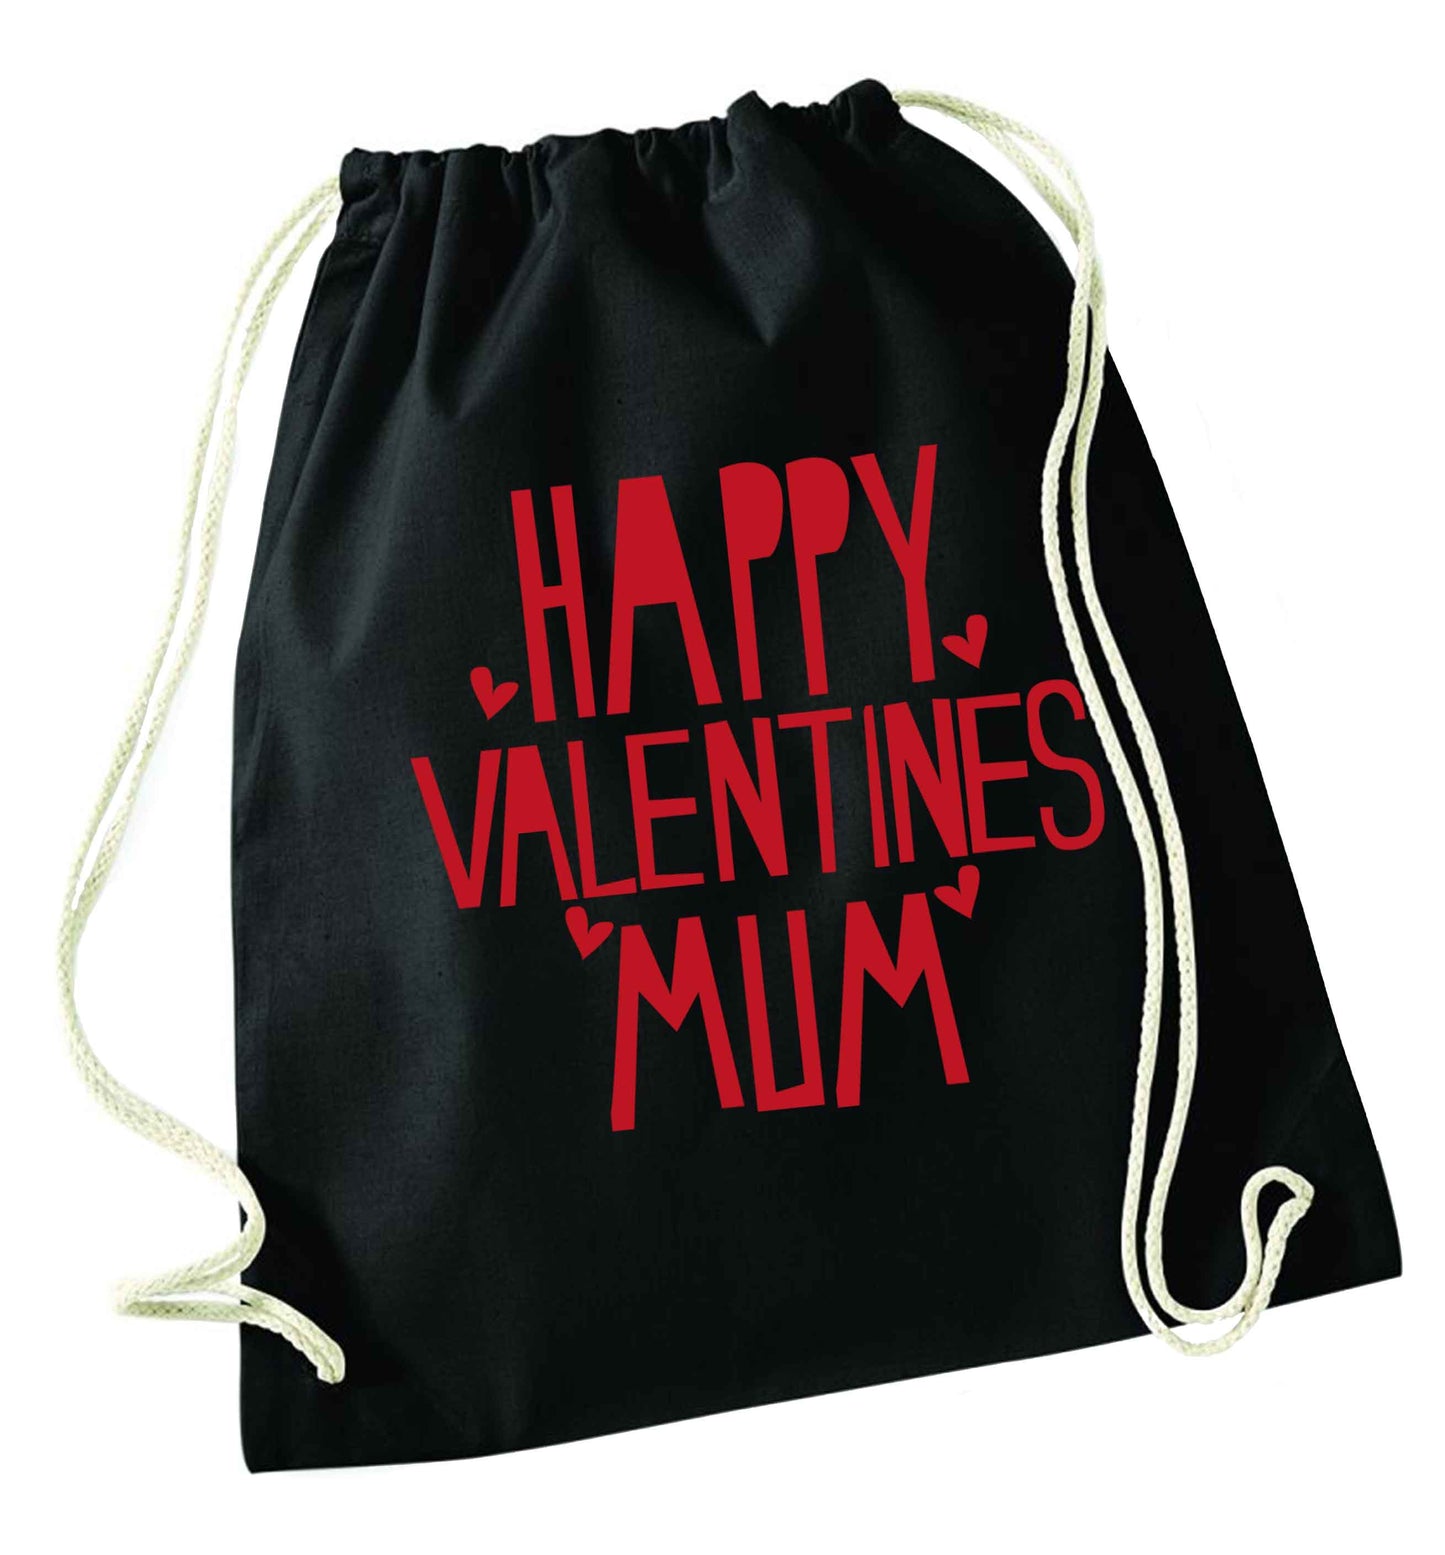 Happy valentines mum black drawstring bag